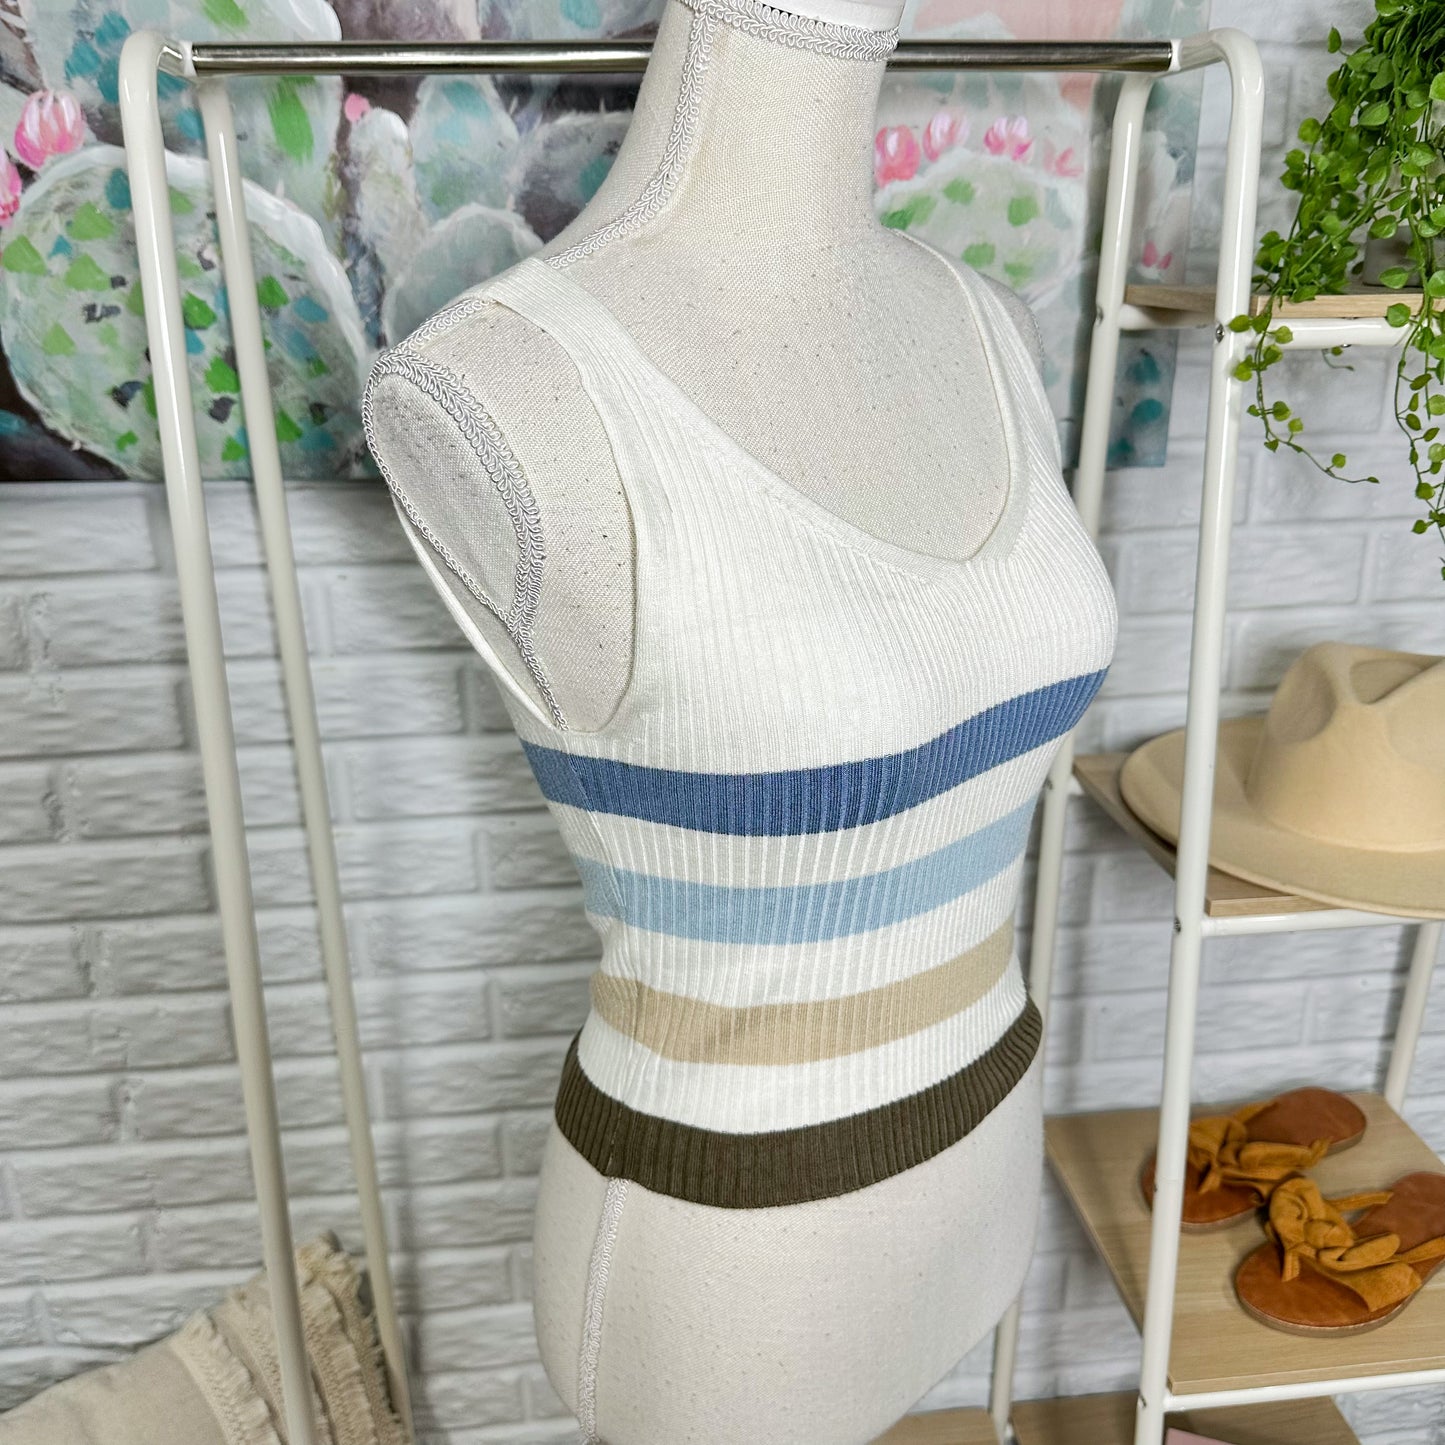 Active USA New Knit Striped Crop Top Size Medium